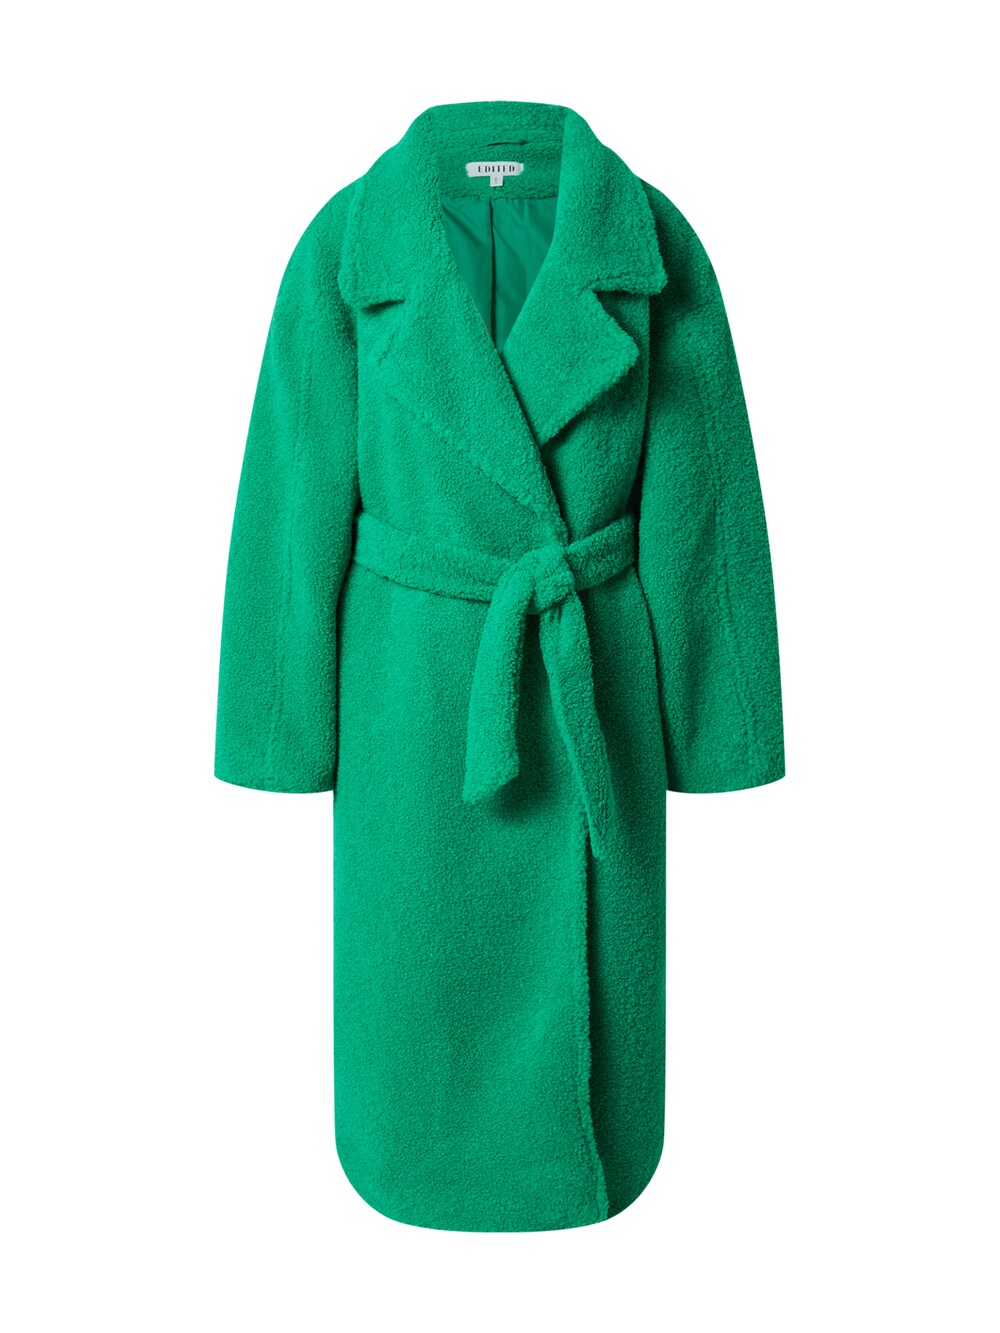 Межсезонное пальто EDITED Imelda, зеленый